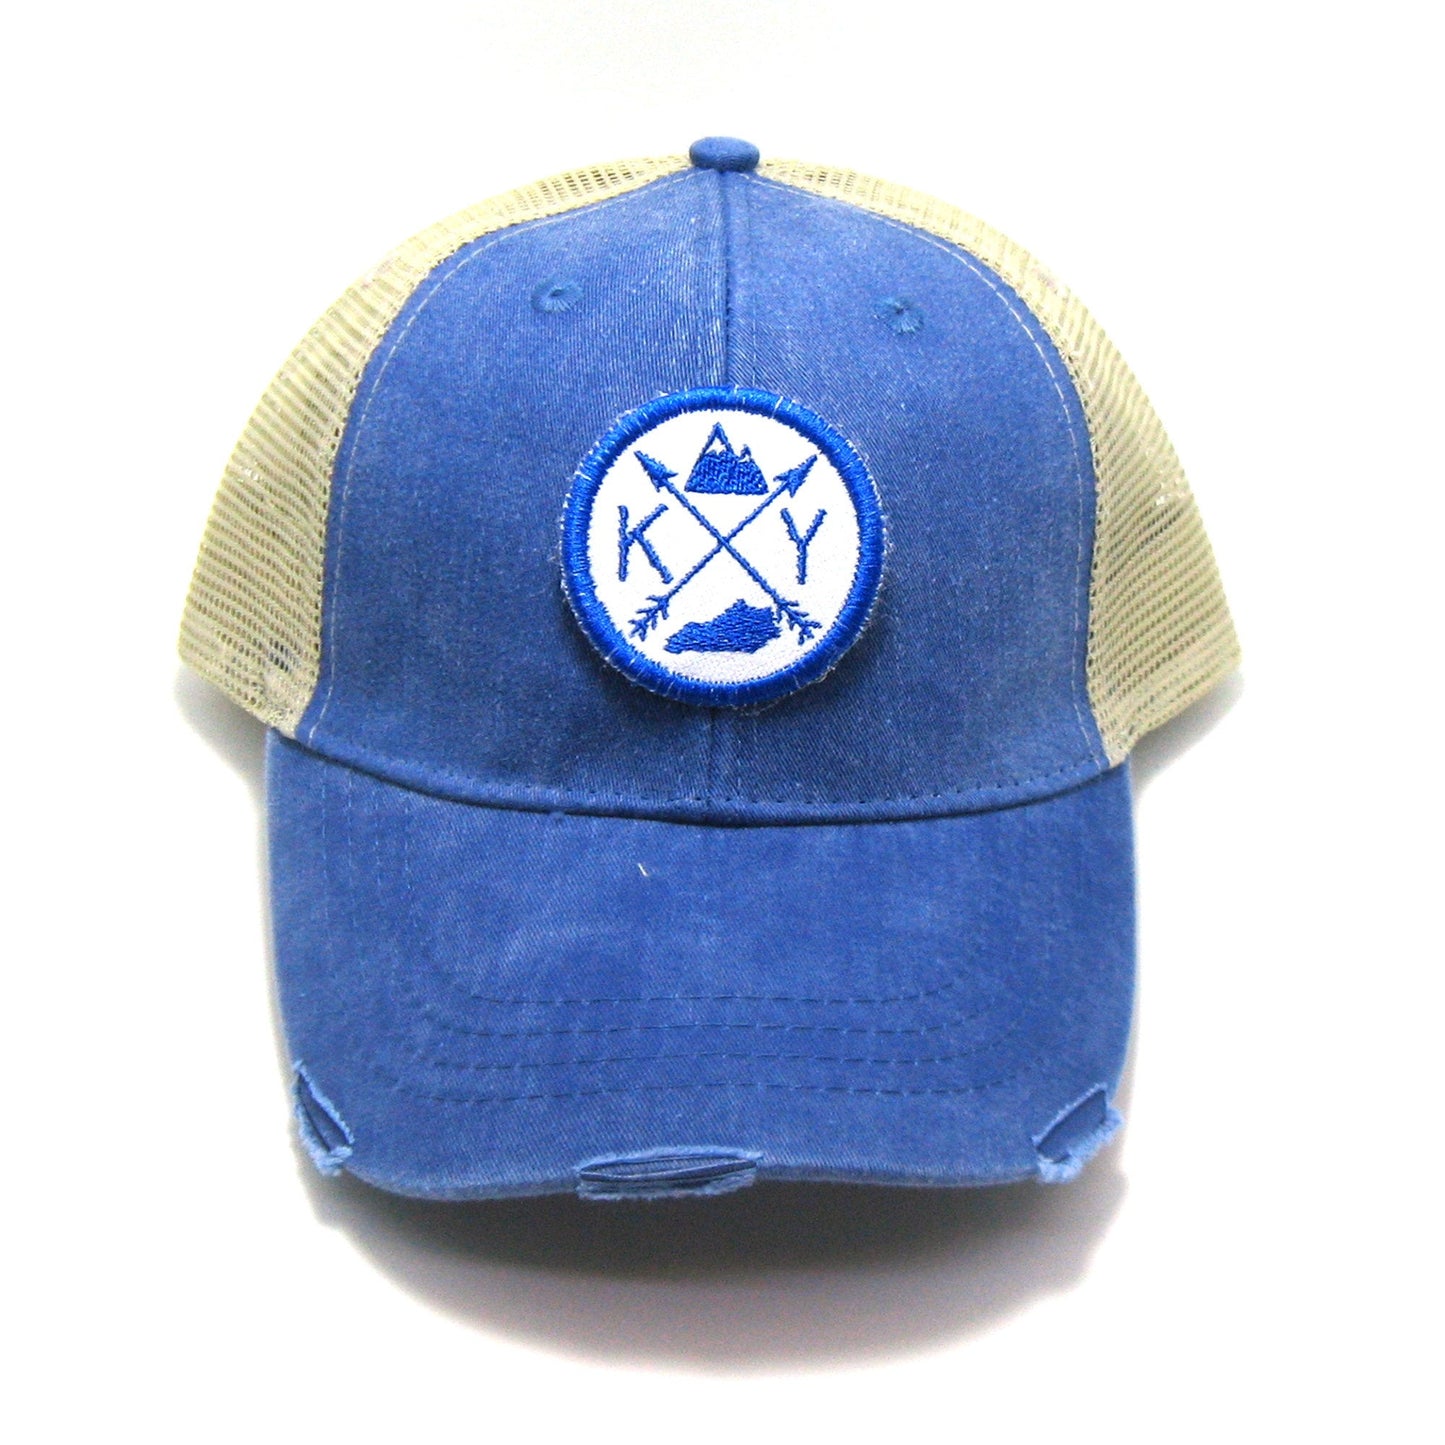 Kentucky Hat - Distressed Snapback Trucker Hat - Kentucky Arrow Compass